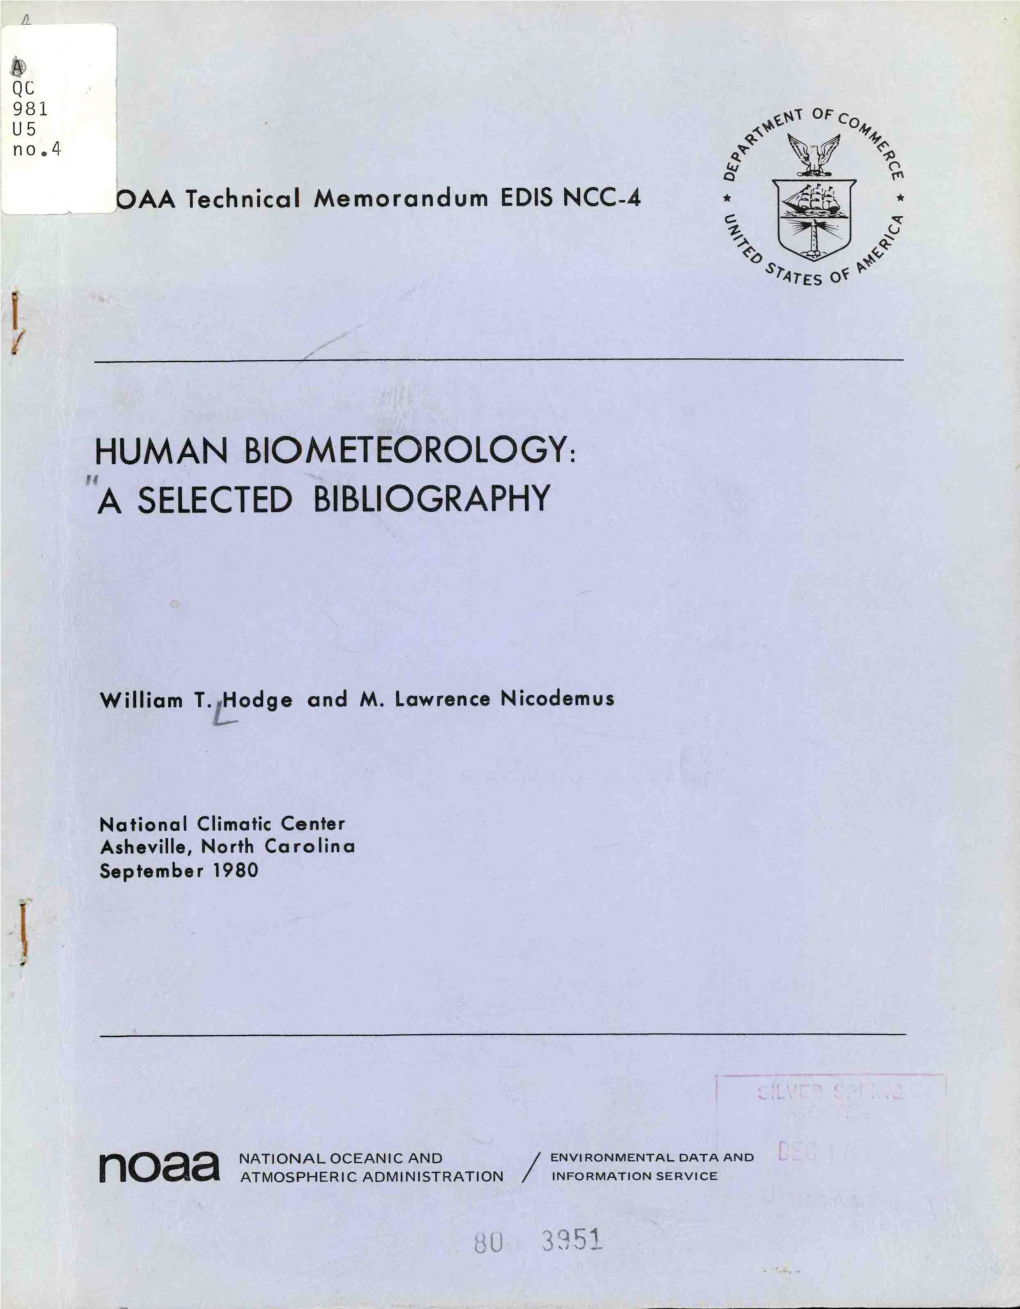 Human Biometeorology: a Selected Bibliography